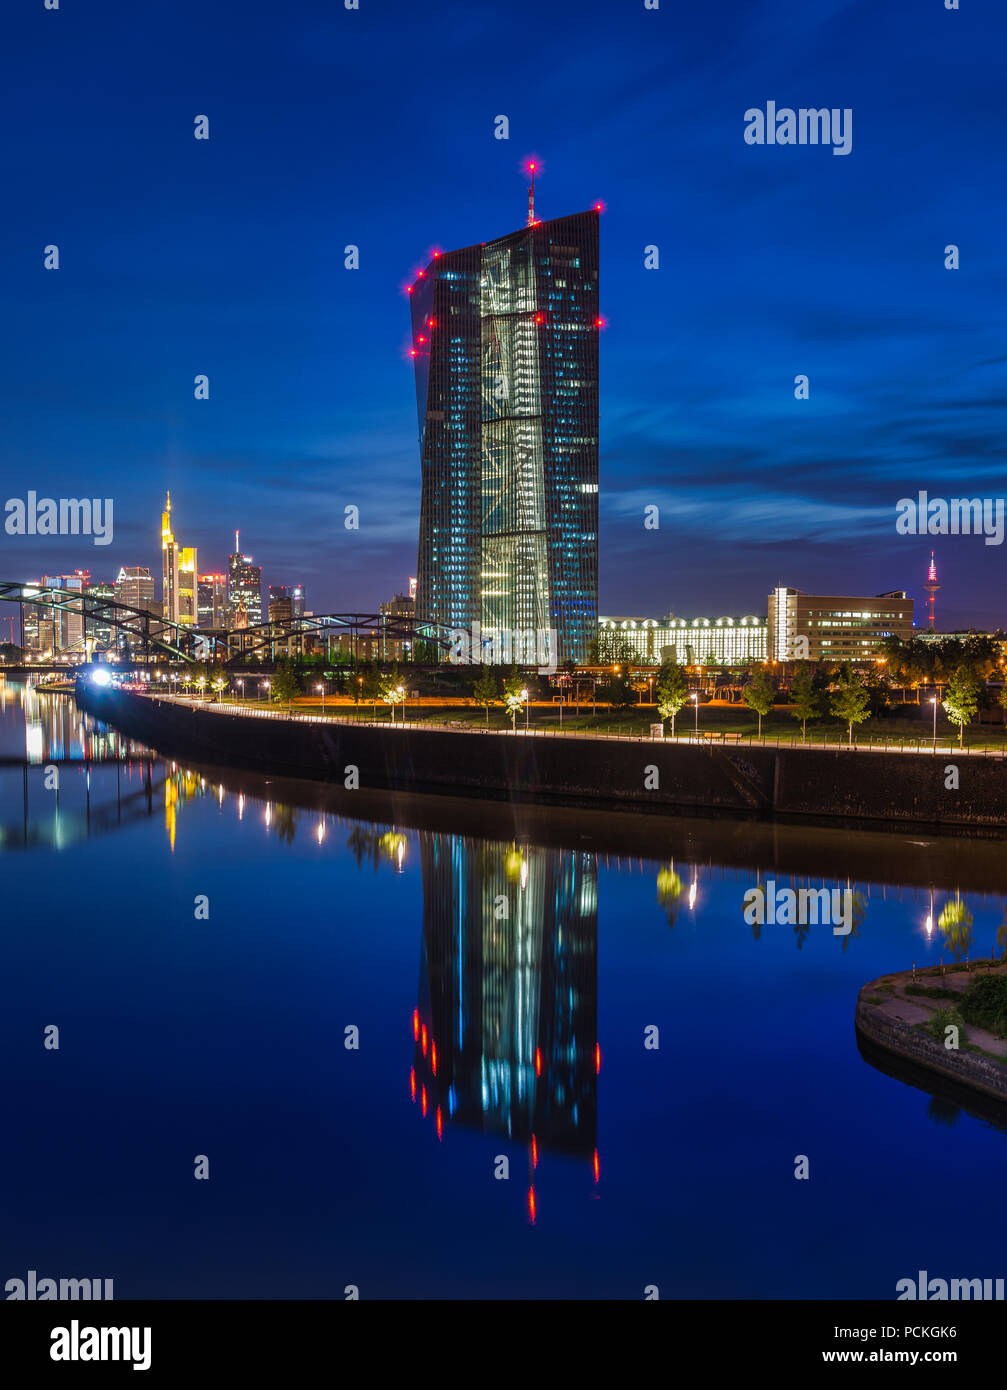 Banque centrale européenne, BCE, la nuit en face de la skyline illuminée, Osthafenbrücke, Frankfurt am Main, Hesse, Allemagne Banque D'Images